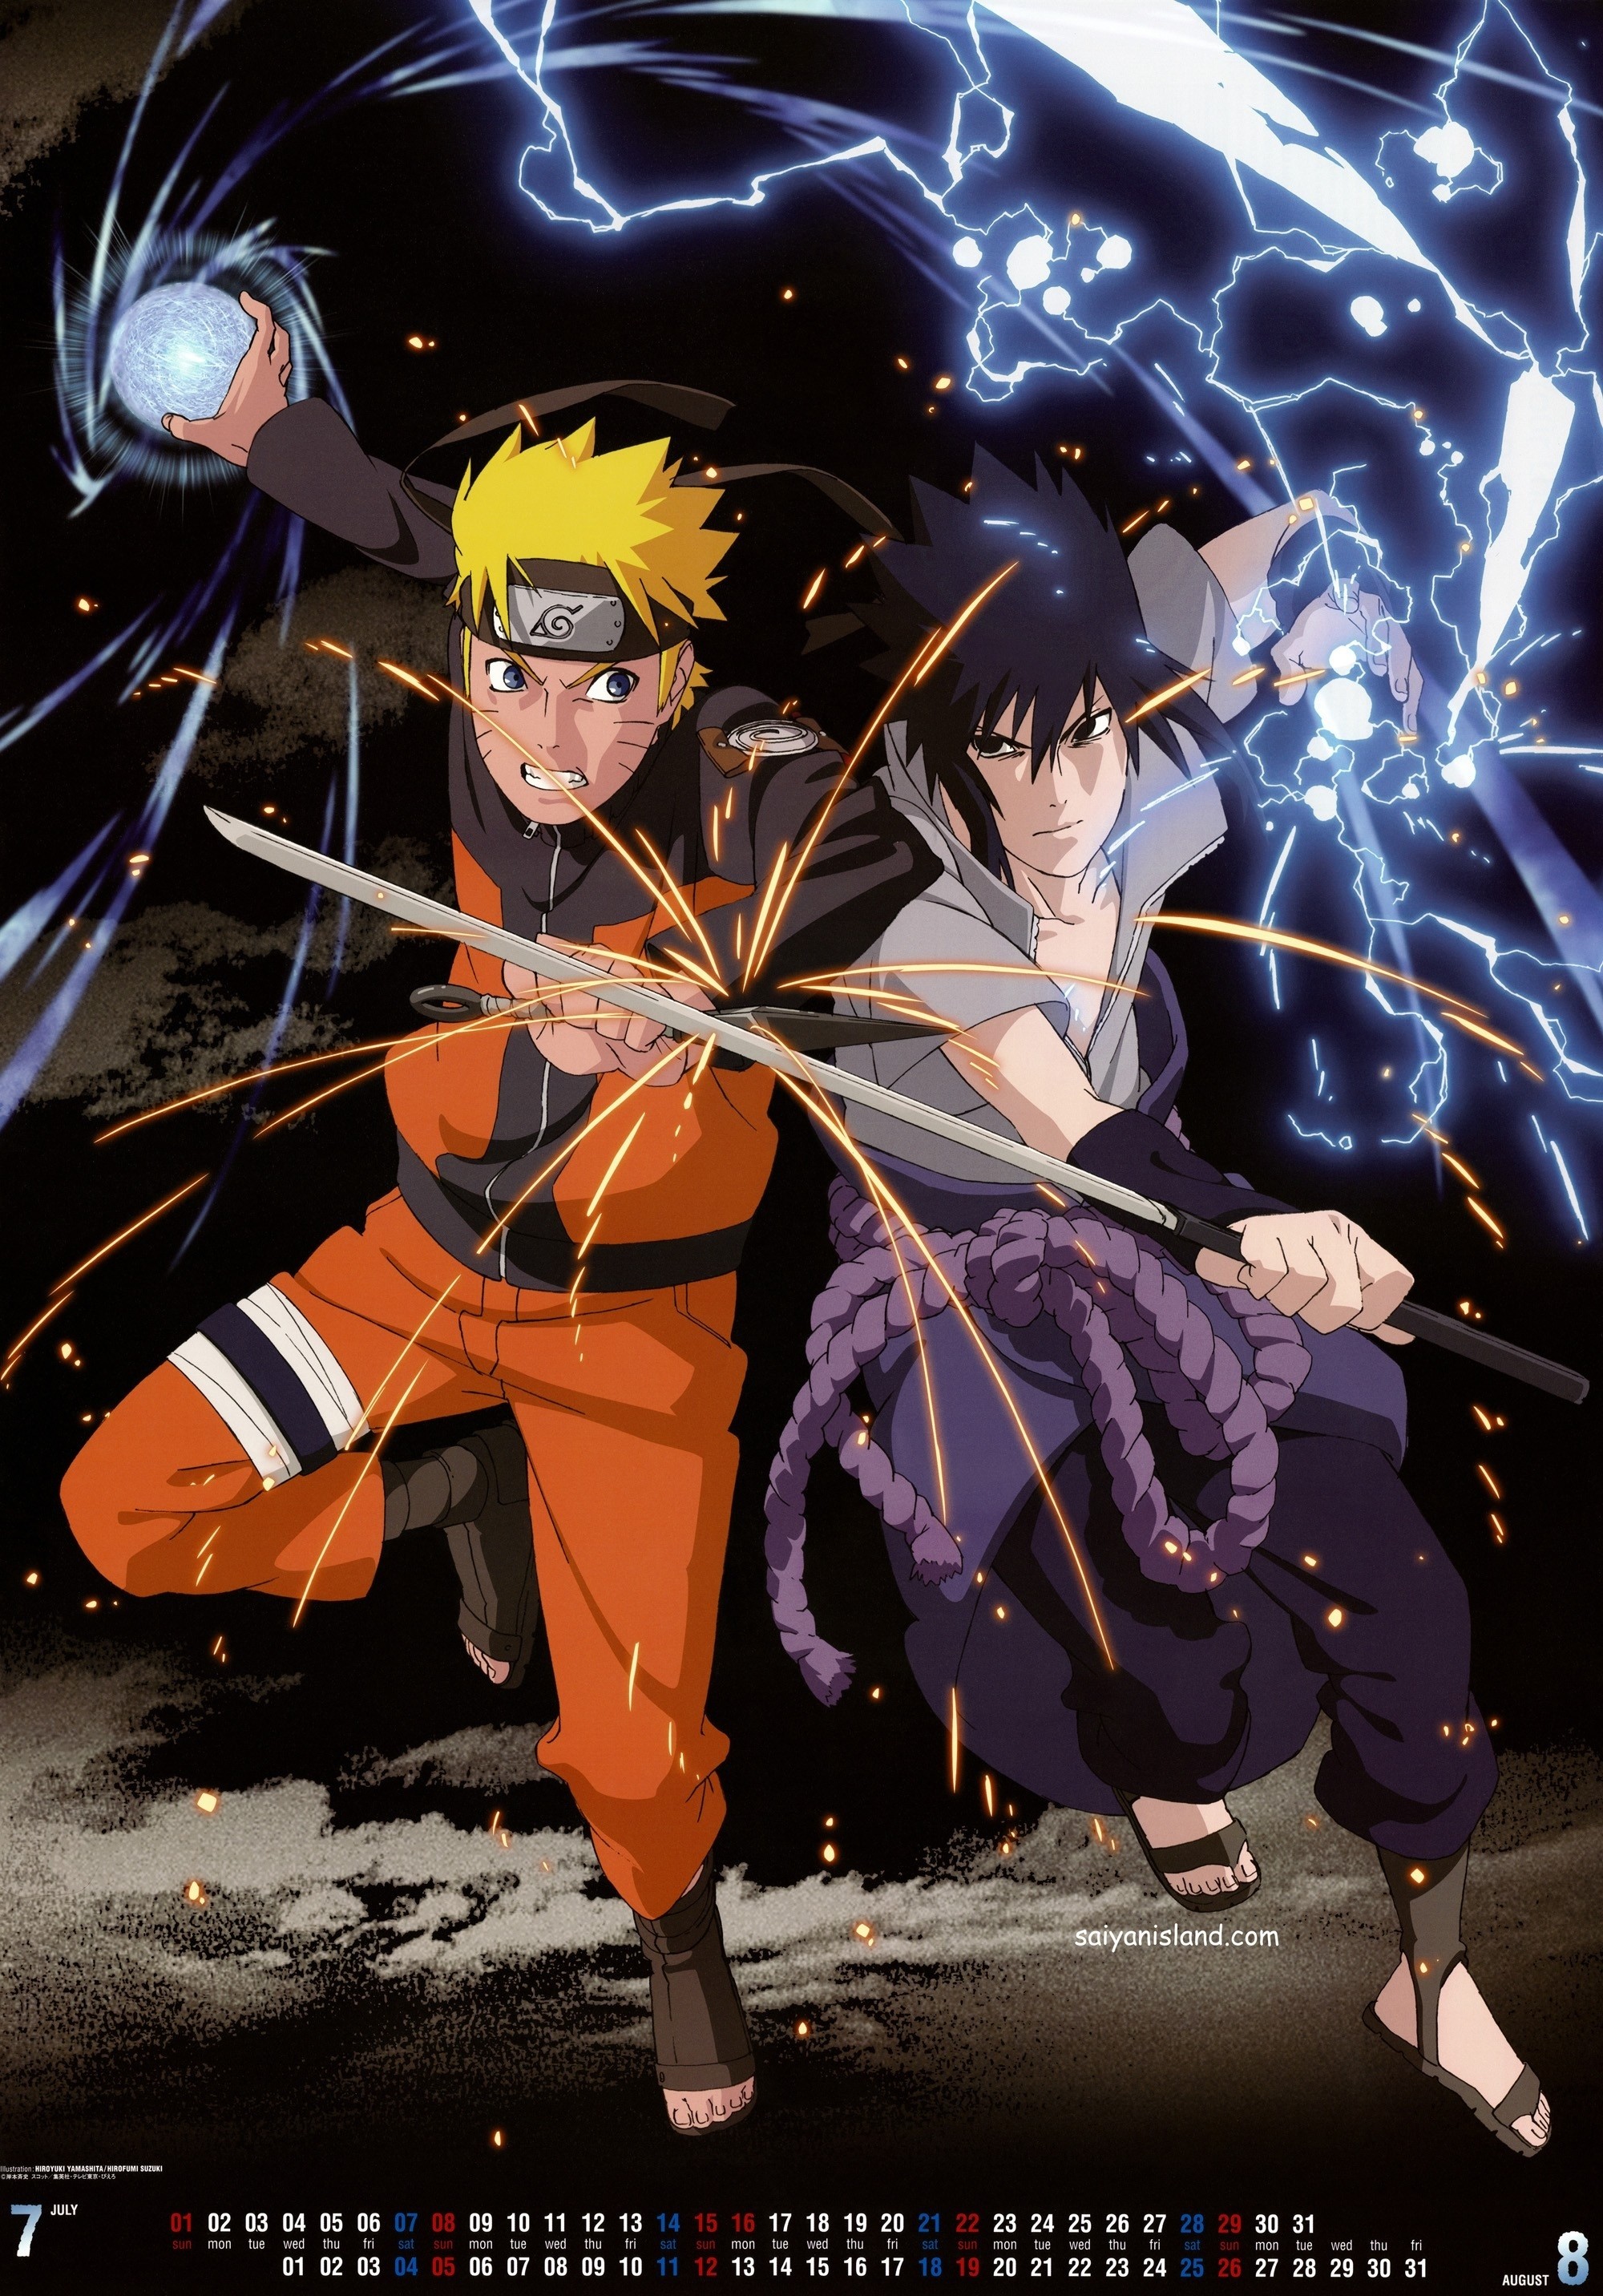 Naruto Vs Sasuke Wallpapers 60 Pictures